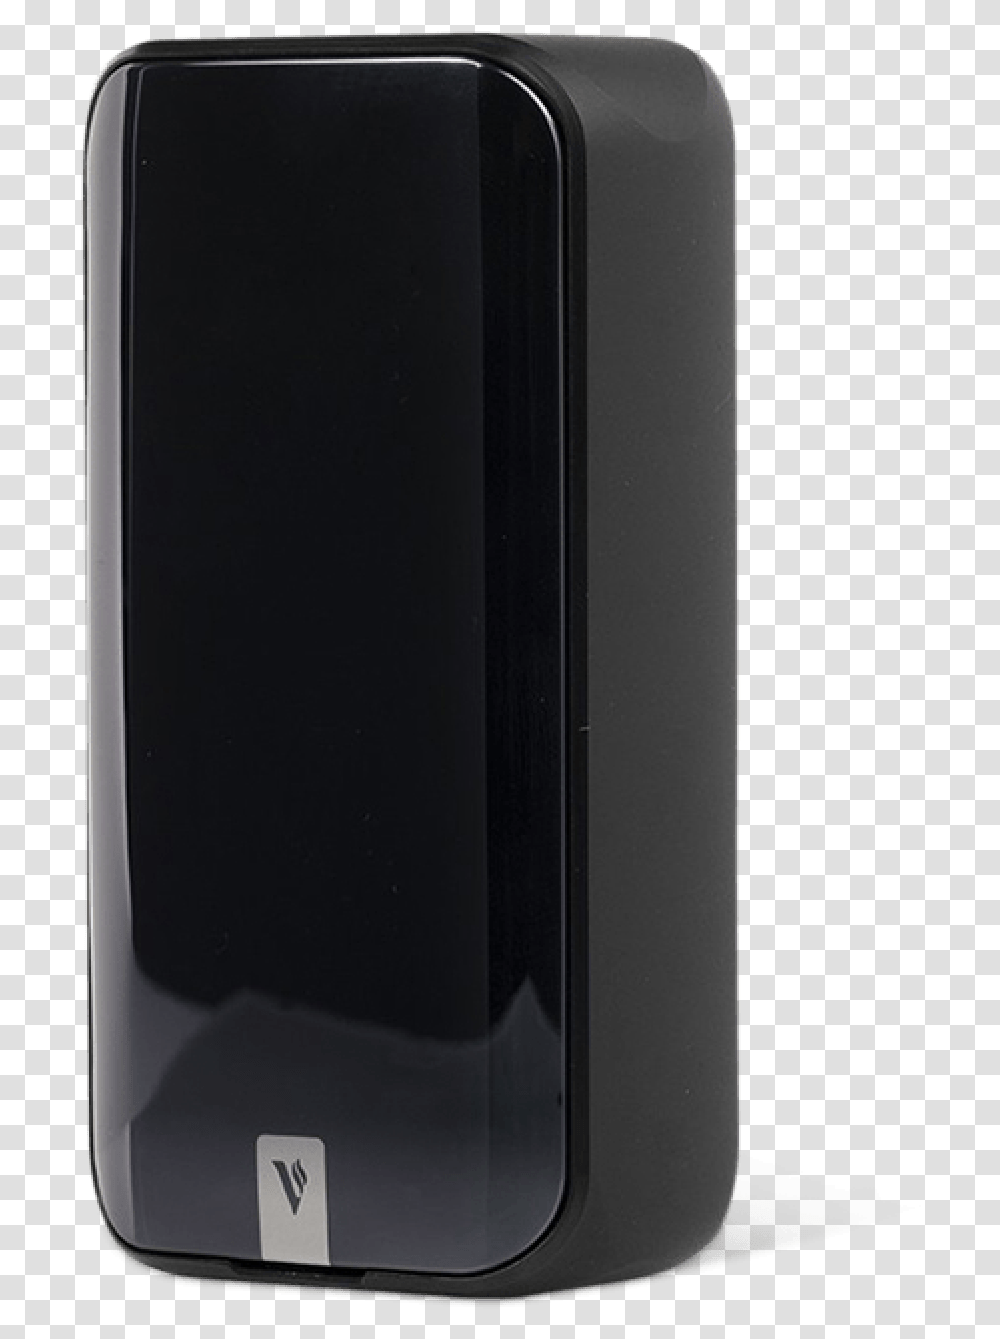 Vaporesso Luxe 220w Mod Black, Mobile Phone, Electronics, Ipod, Bottle Transparent Png